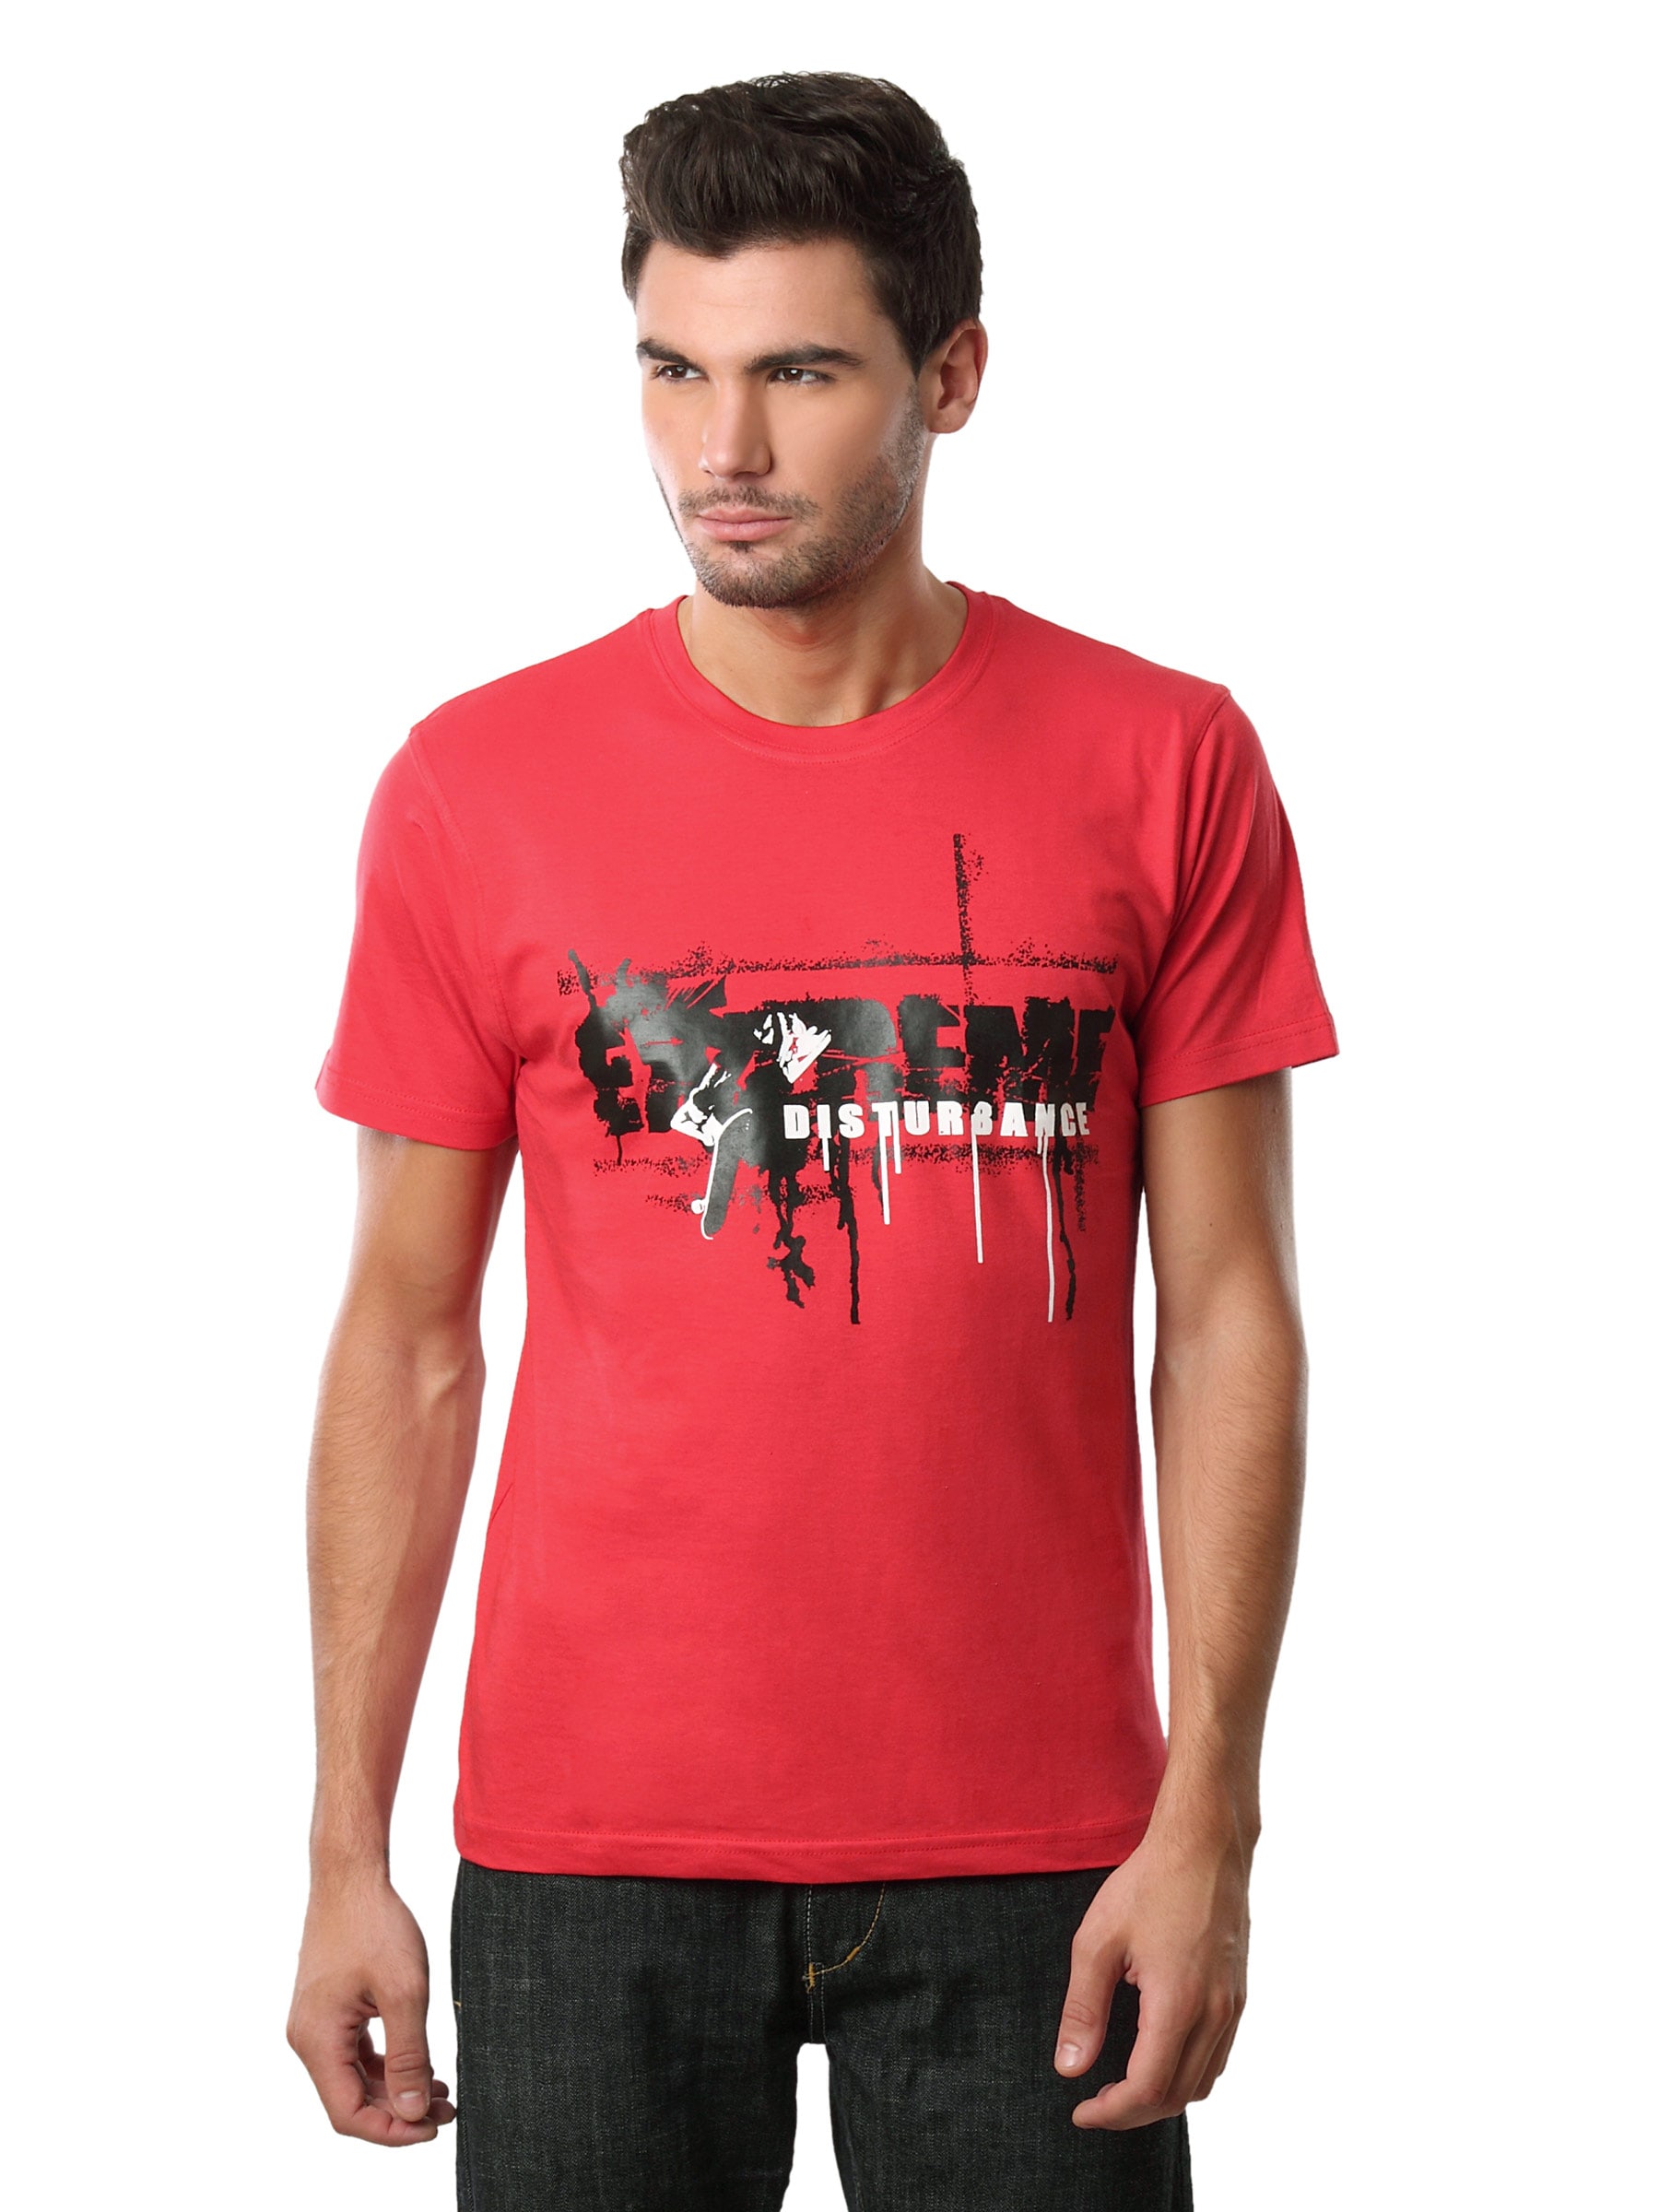 Myntra Men Extreme Disturbance Red T-shirt